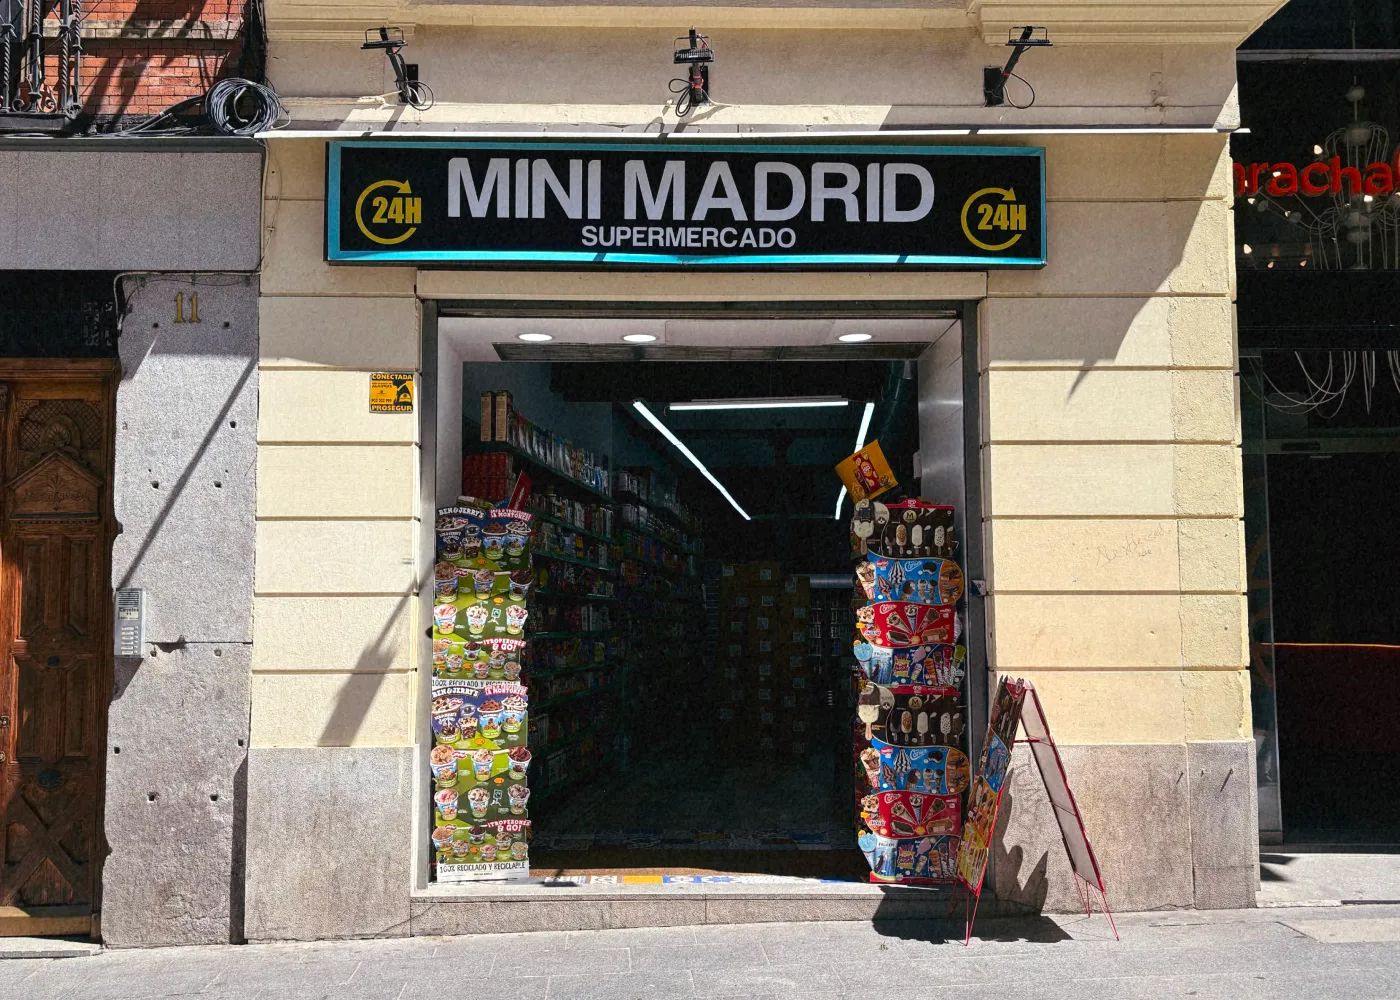 Mini Madrid Supermercado 24h